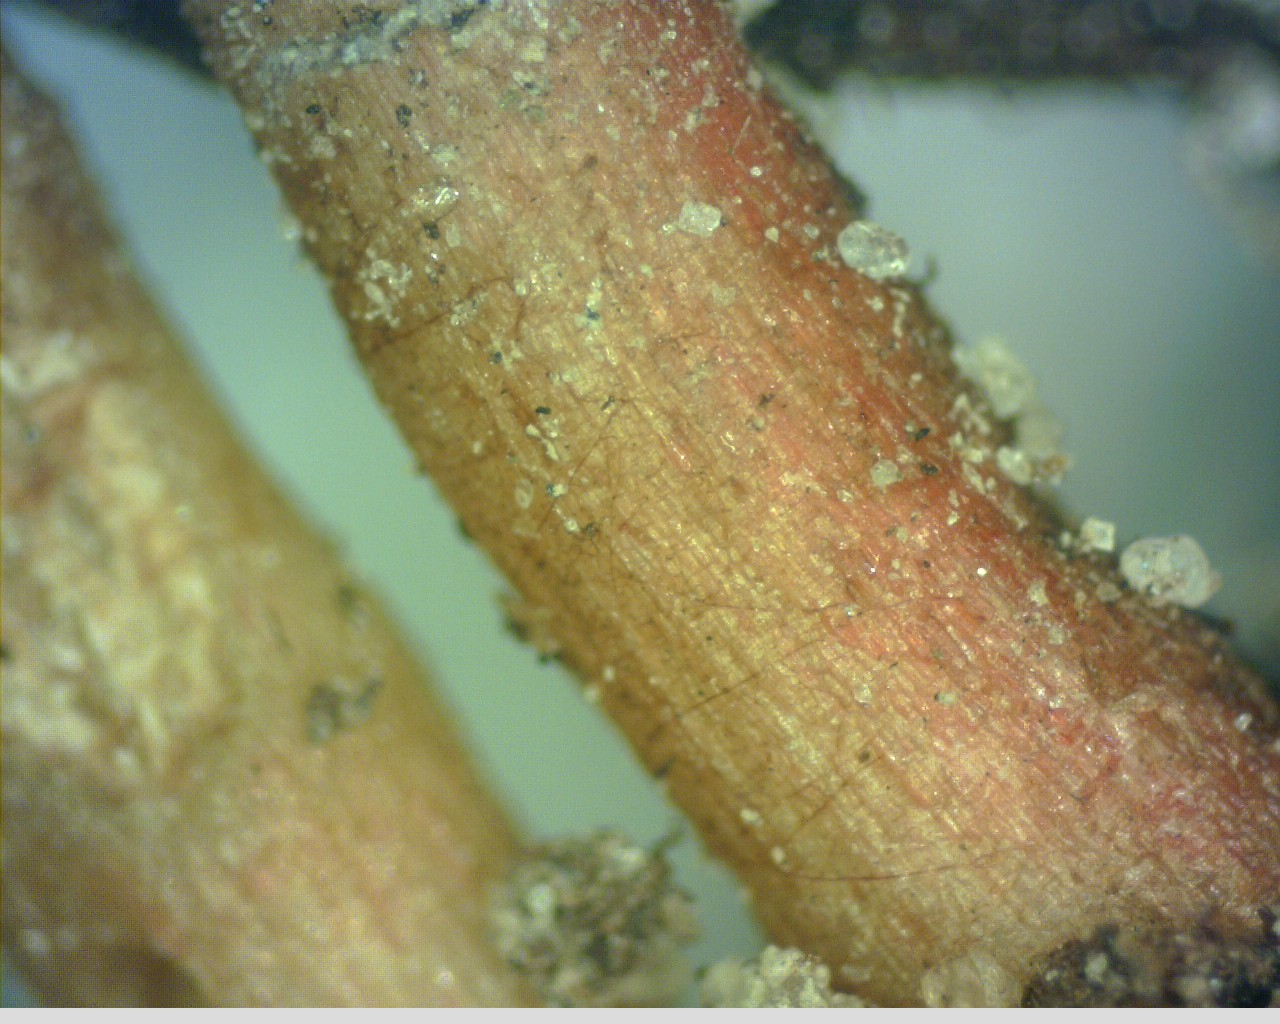 Closeup of plant root